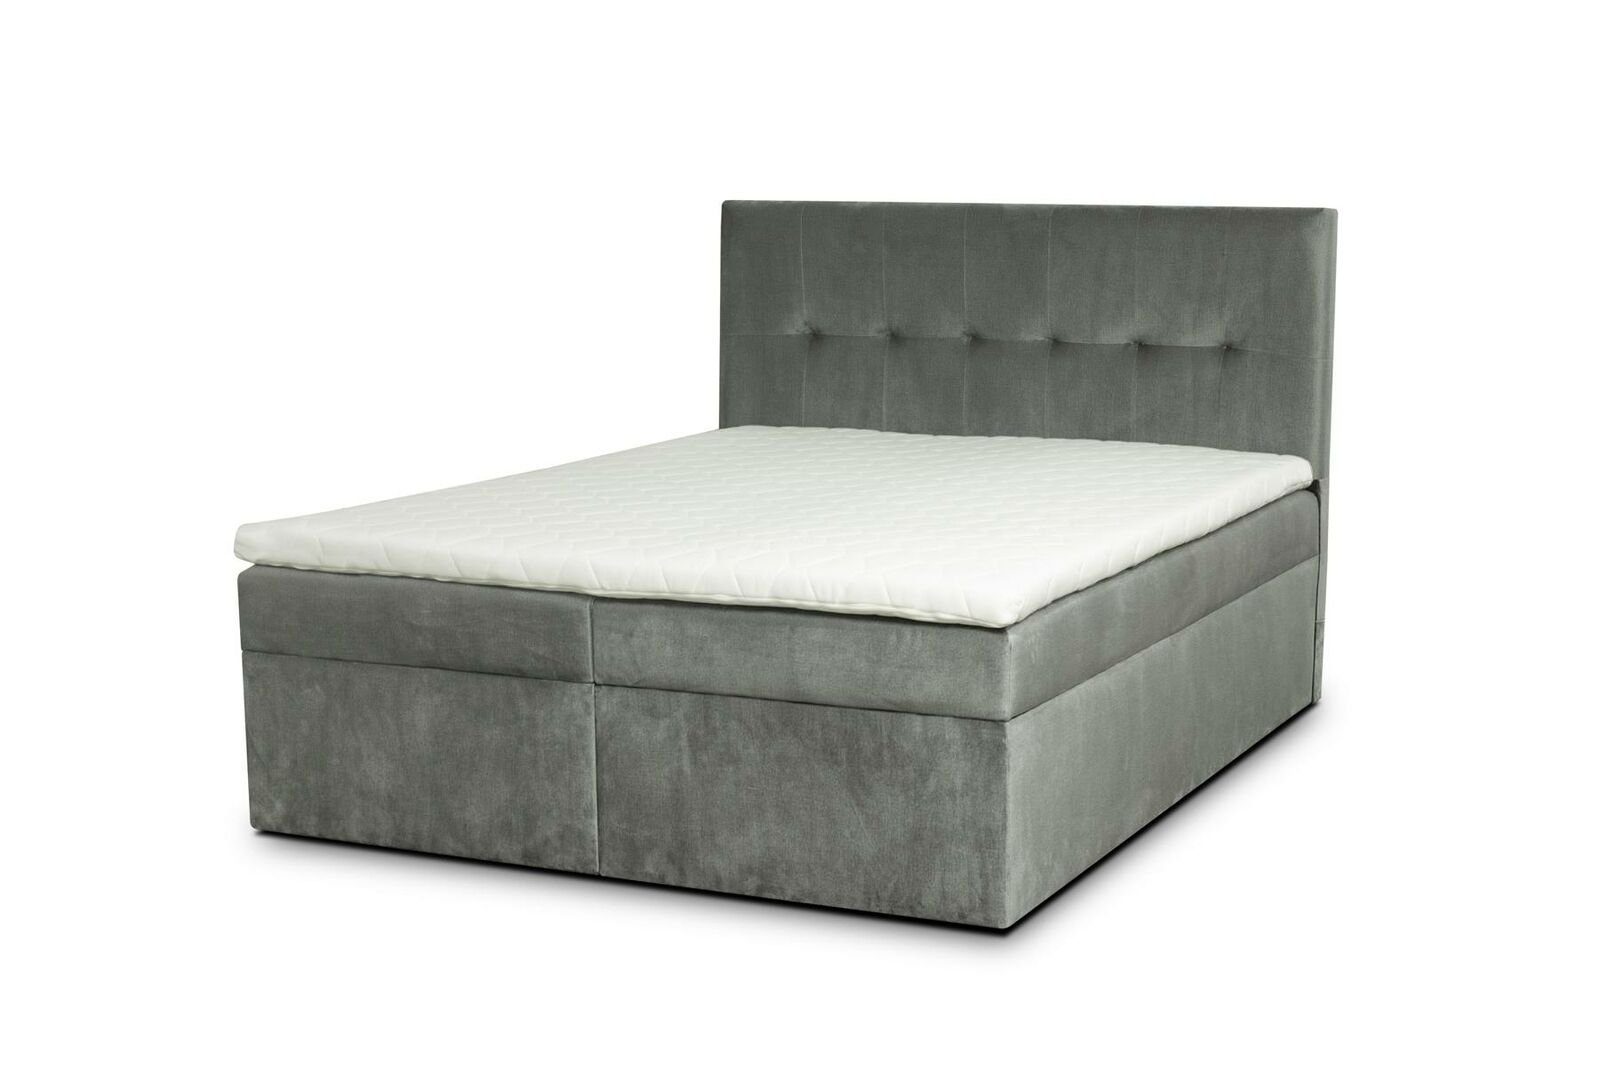 Luxus Grau Doppelbett Design Bett, Hotel Bett Chesterfield JVmoebel 180x200 Betten